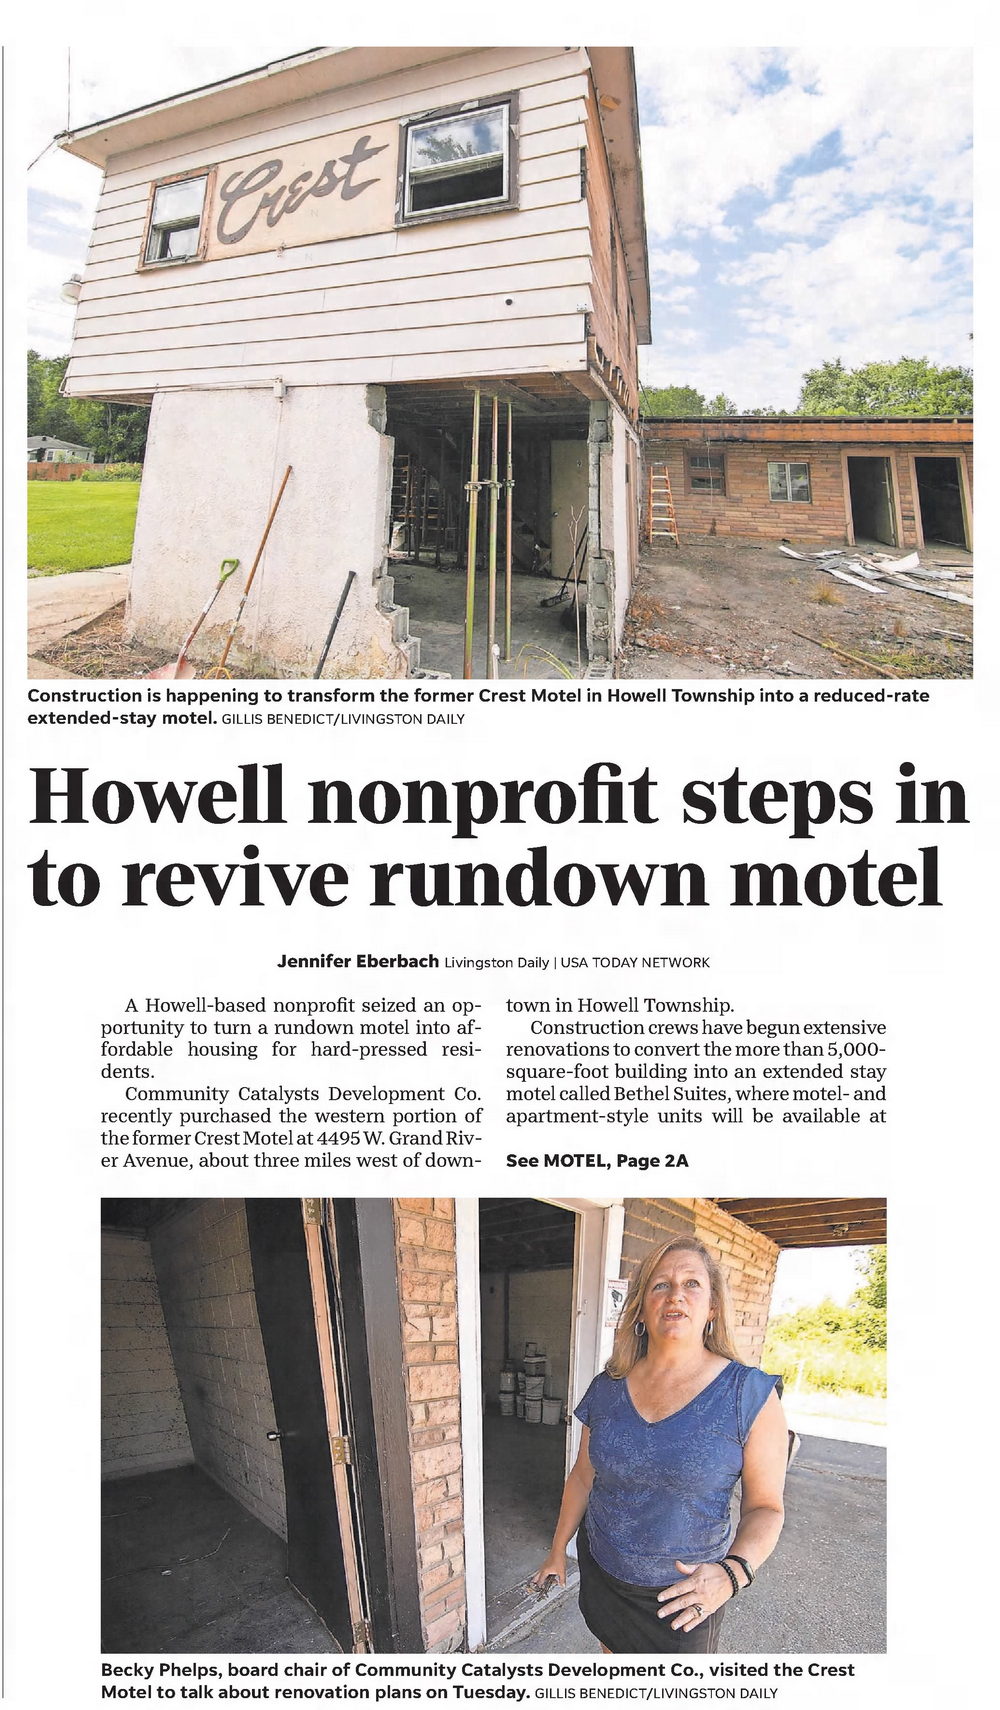 Crest Motel (Bethel Suites) - Aug 2022 Article On Renovation